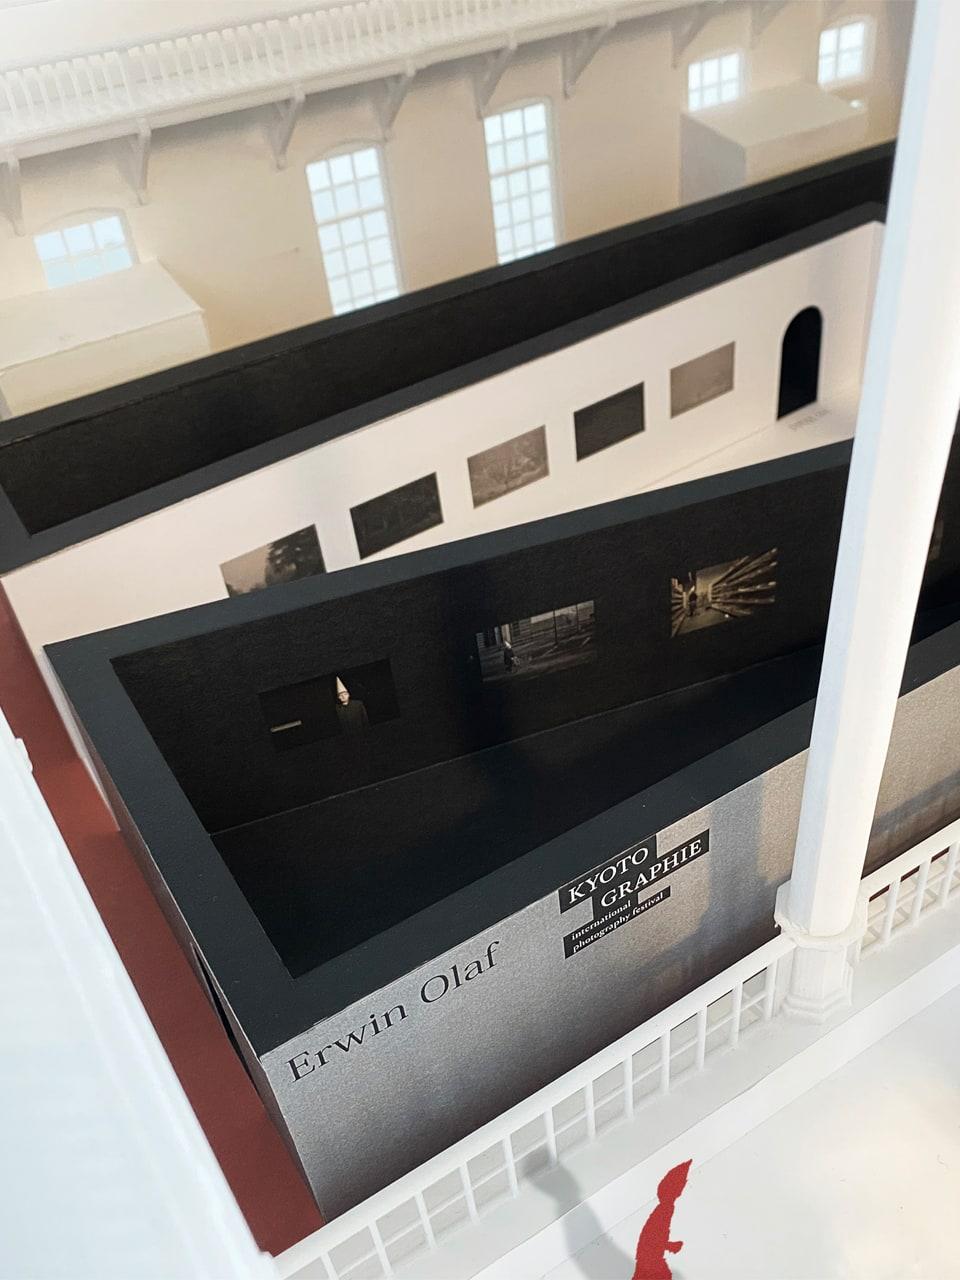 「KYOTOGRAPHIE 2021」、写真家アーウィン・オラフの展示空間は遠藤克彦建築研究所がデザイン